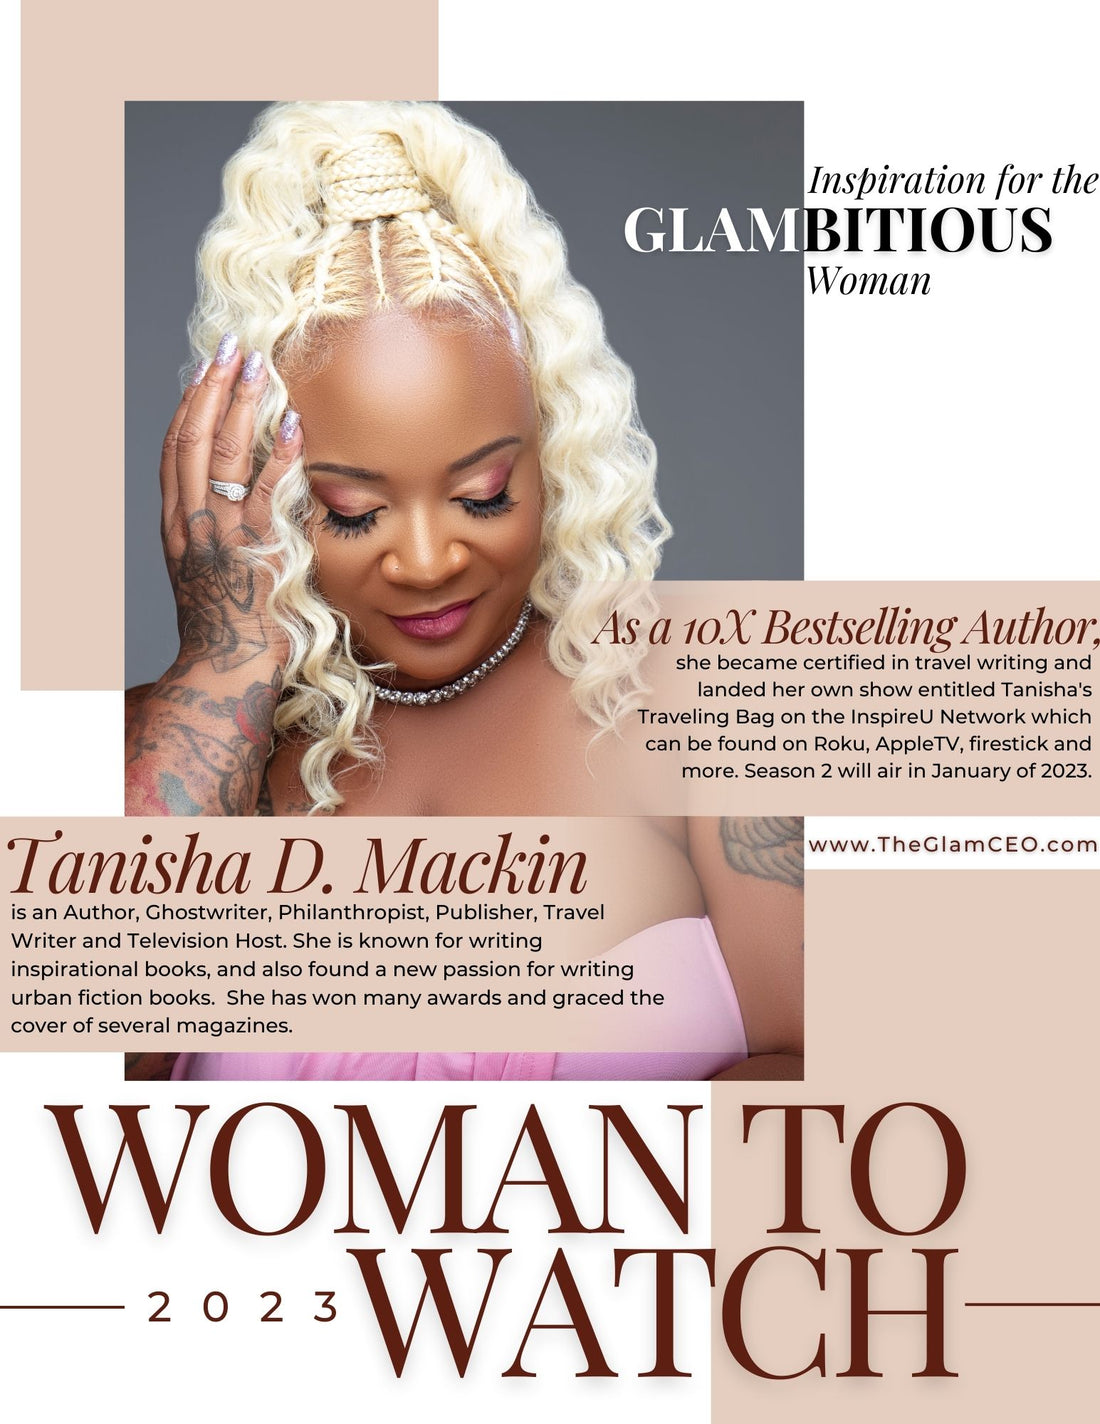 2023 Woman to Watch: Tanisha D. Mackin